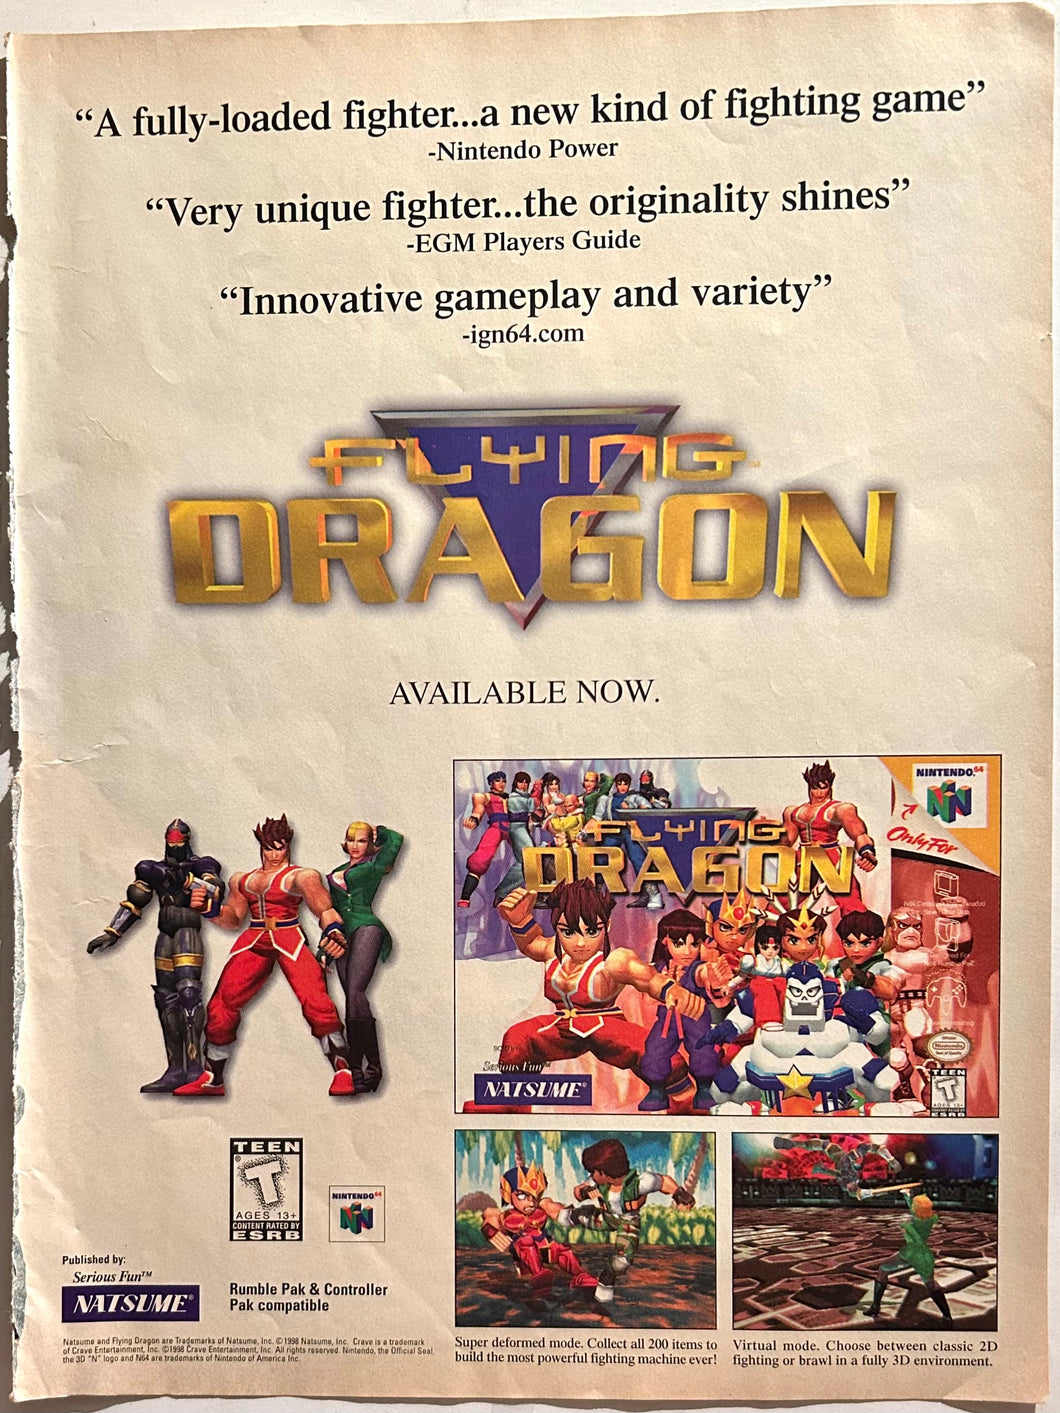 Flying Dragon - N64 - Original Vintage Advertisement - Print Ads - Laminated A4 Poster